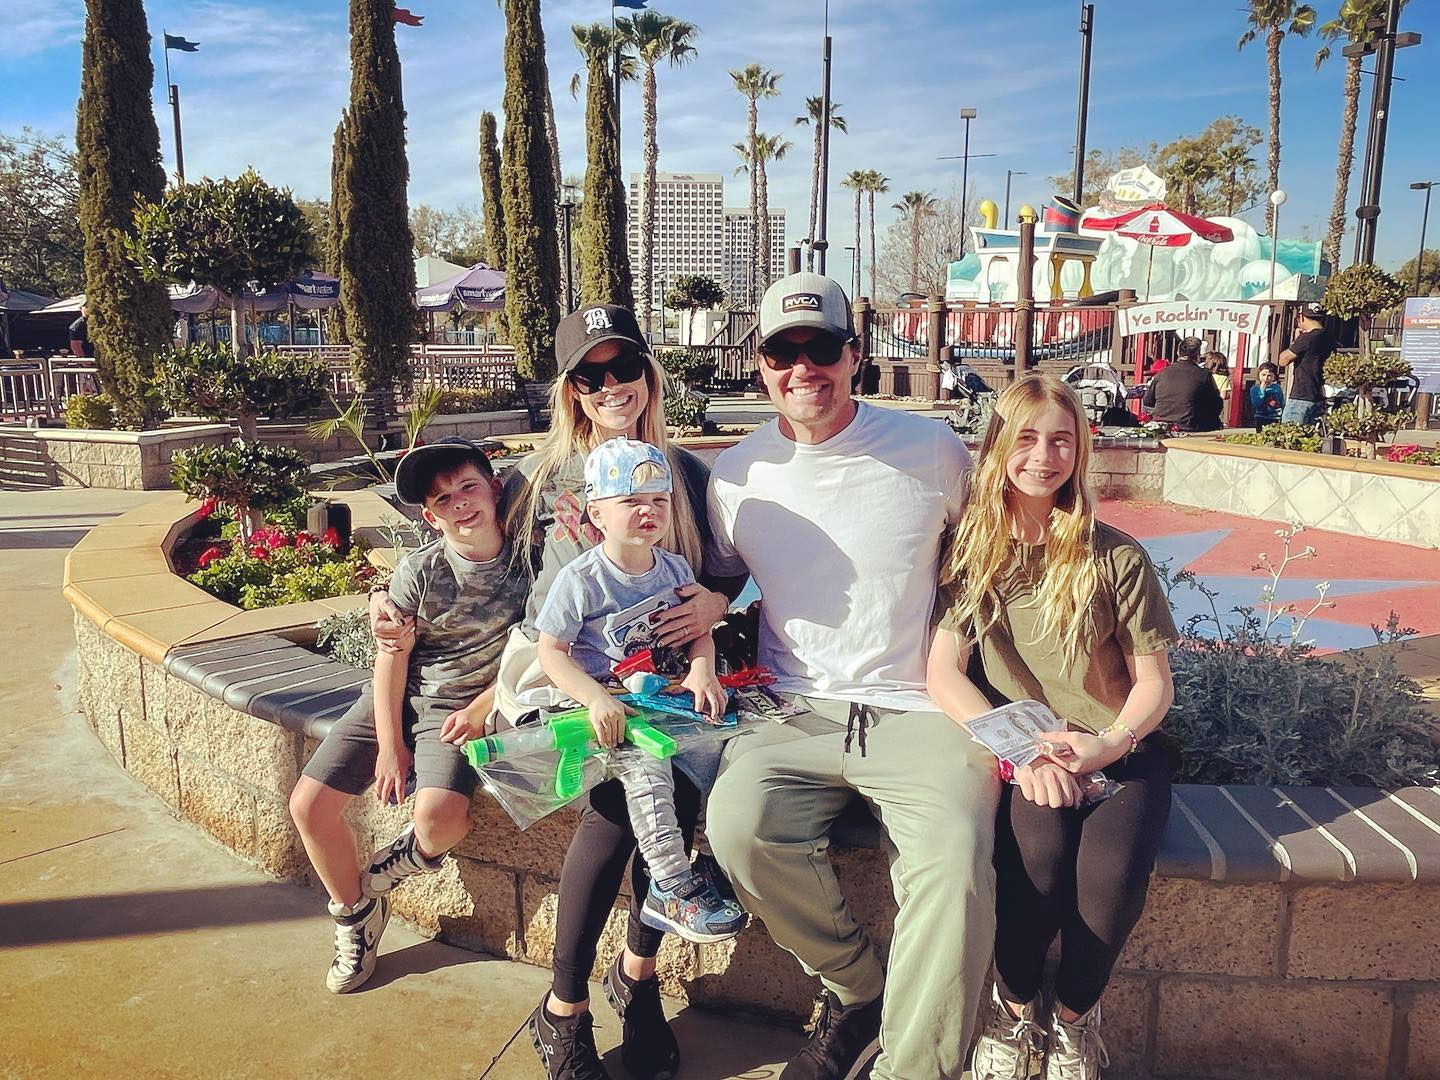 February 2022 Christina Haack Husband Joshua Hall Bonding With Her 3 Kids